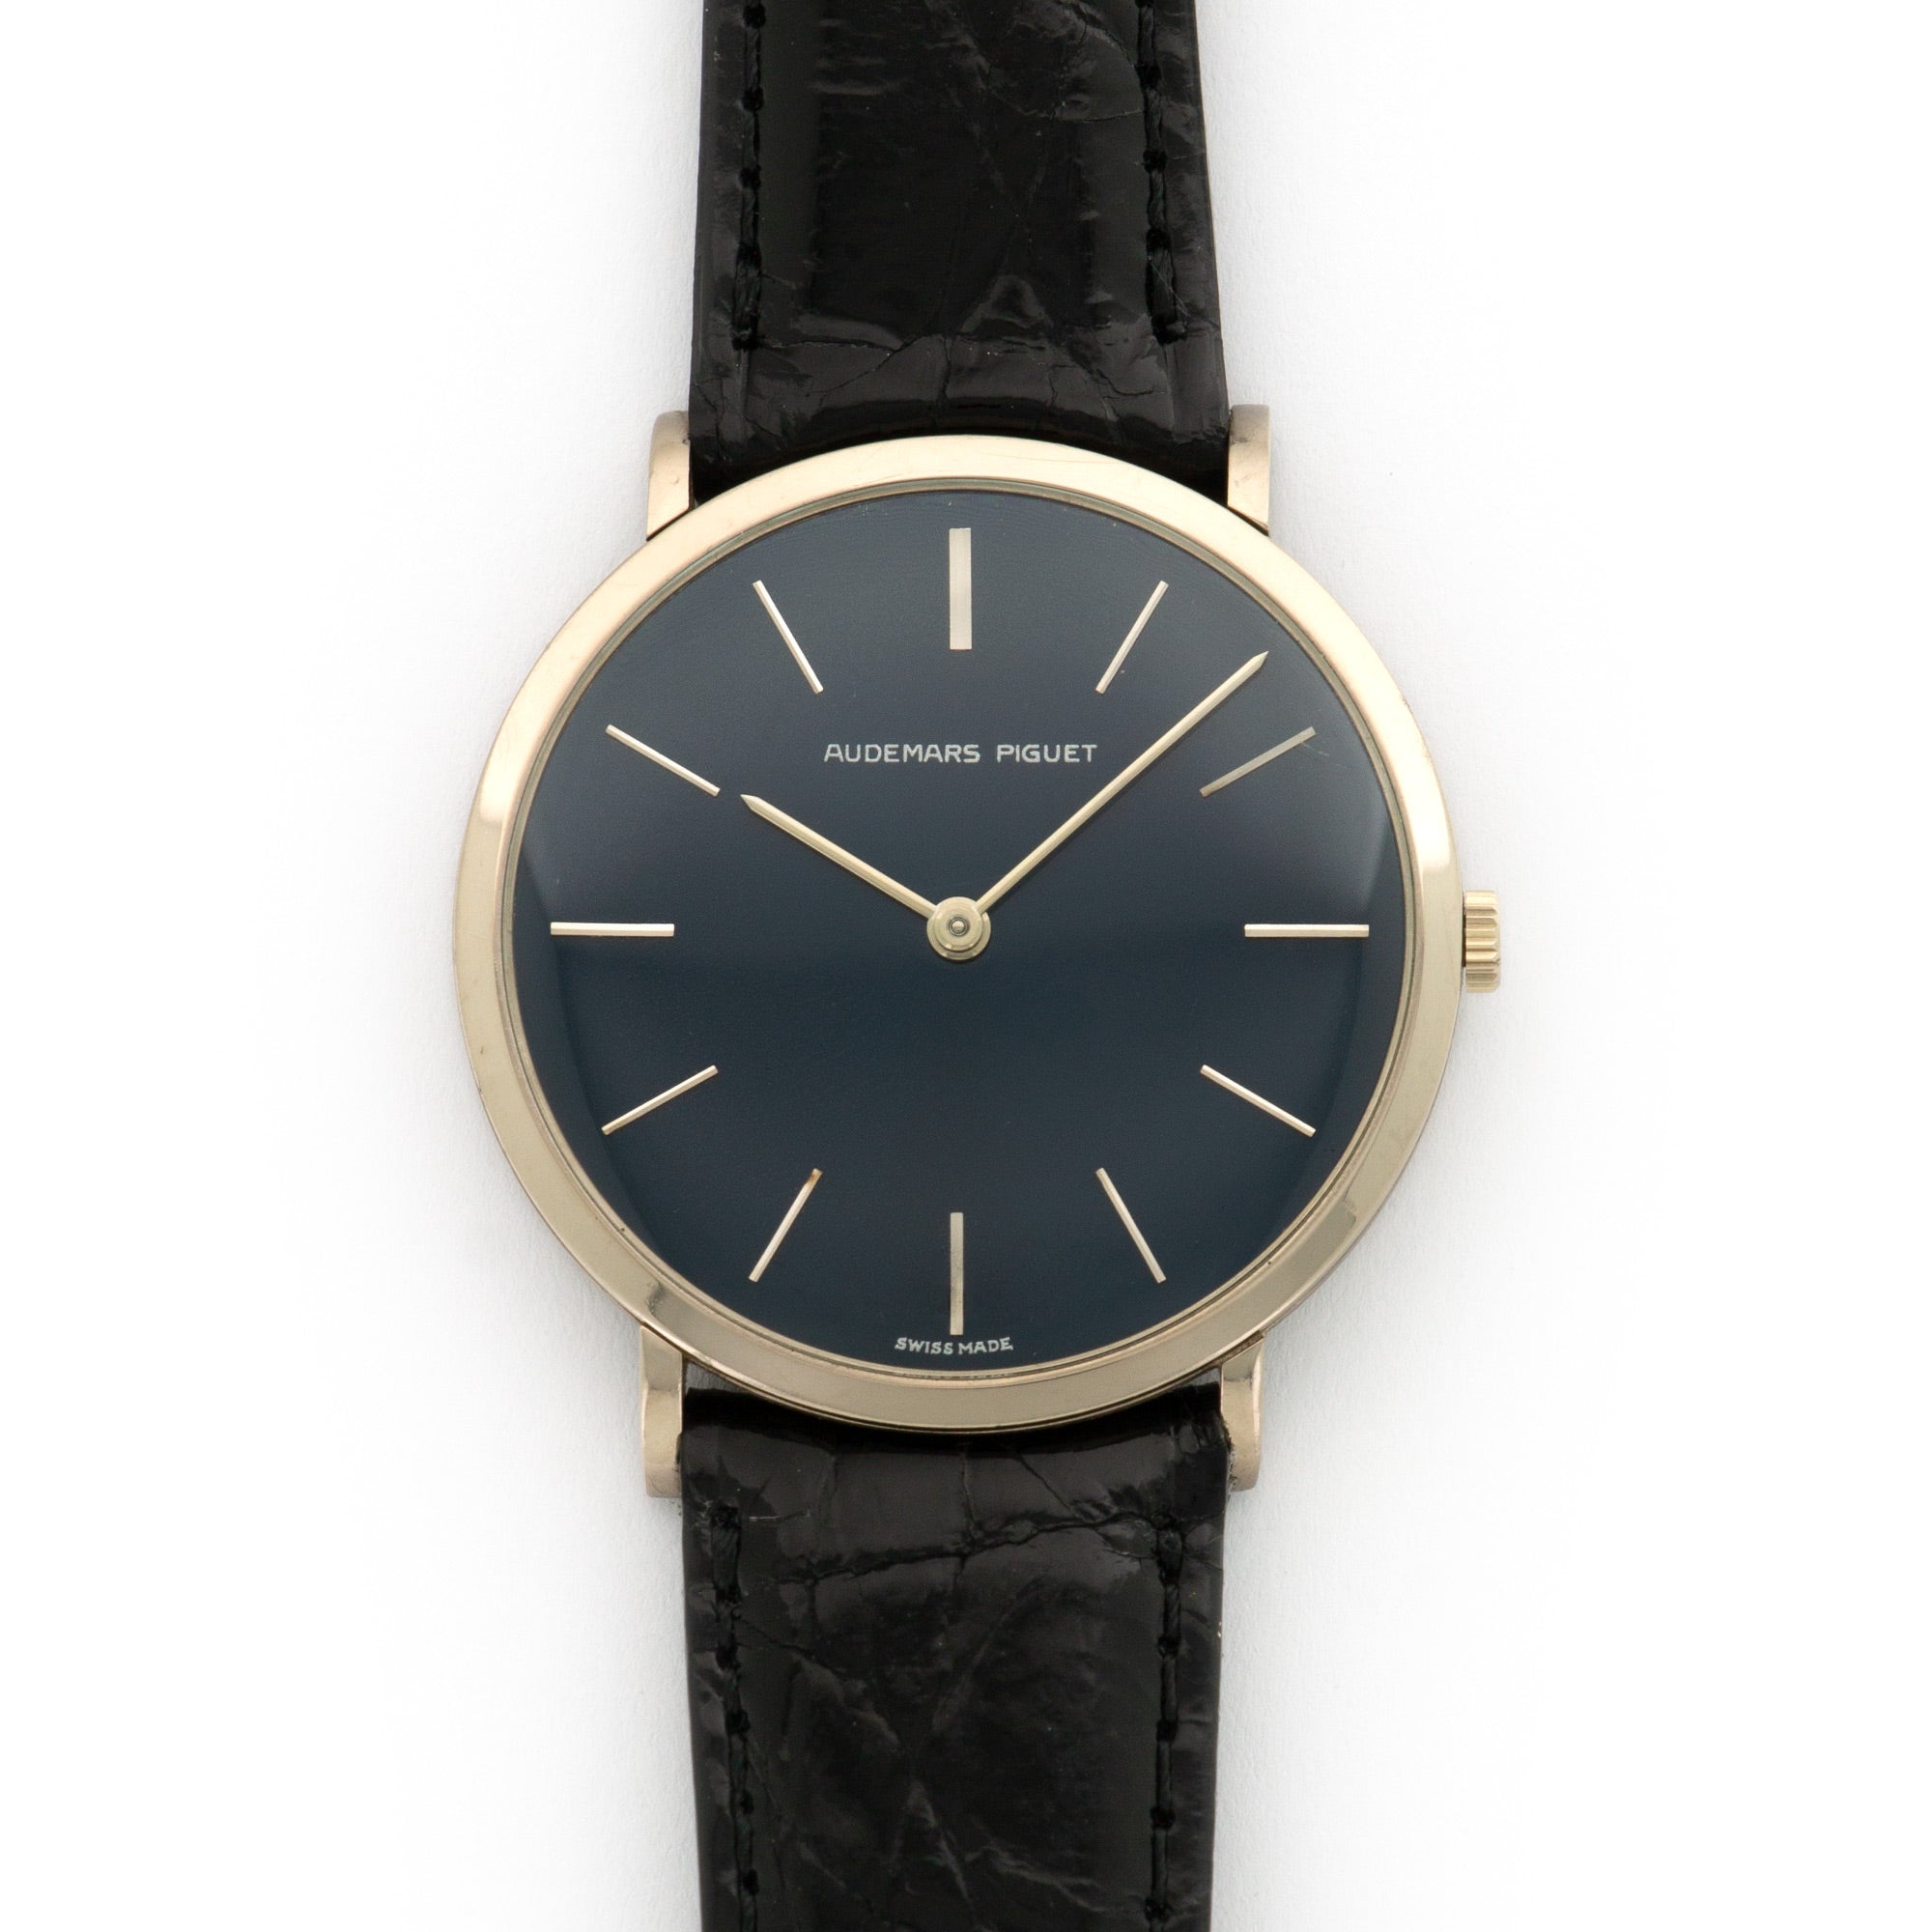 Audemars Piguet - Audemars Piguet White Gold Ultra-Thin Strap Watch - The Keystone Watches